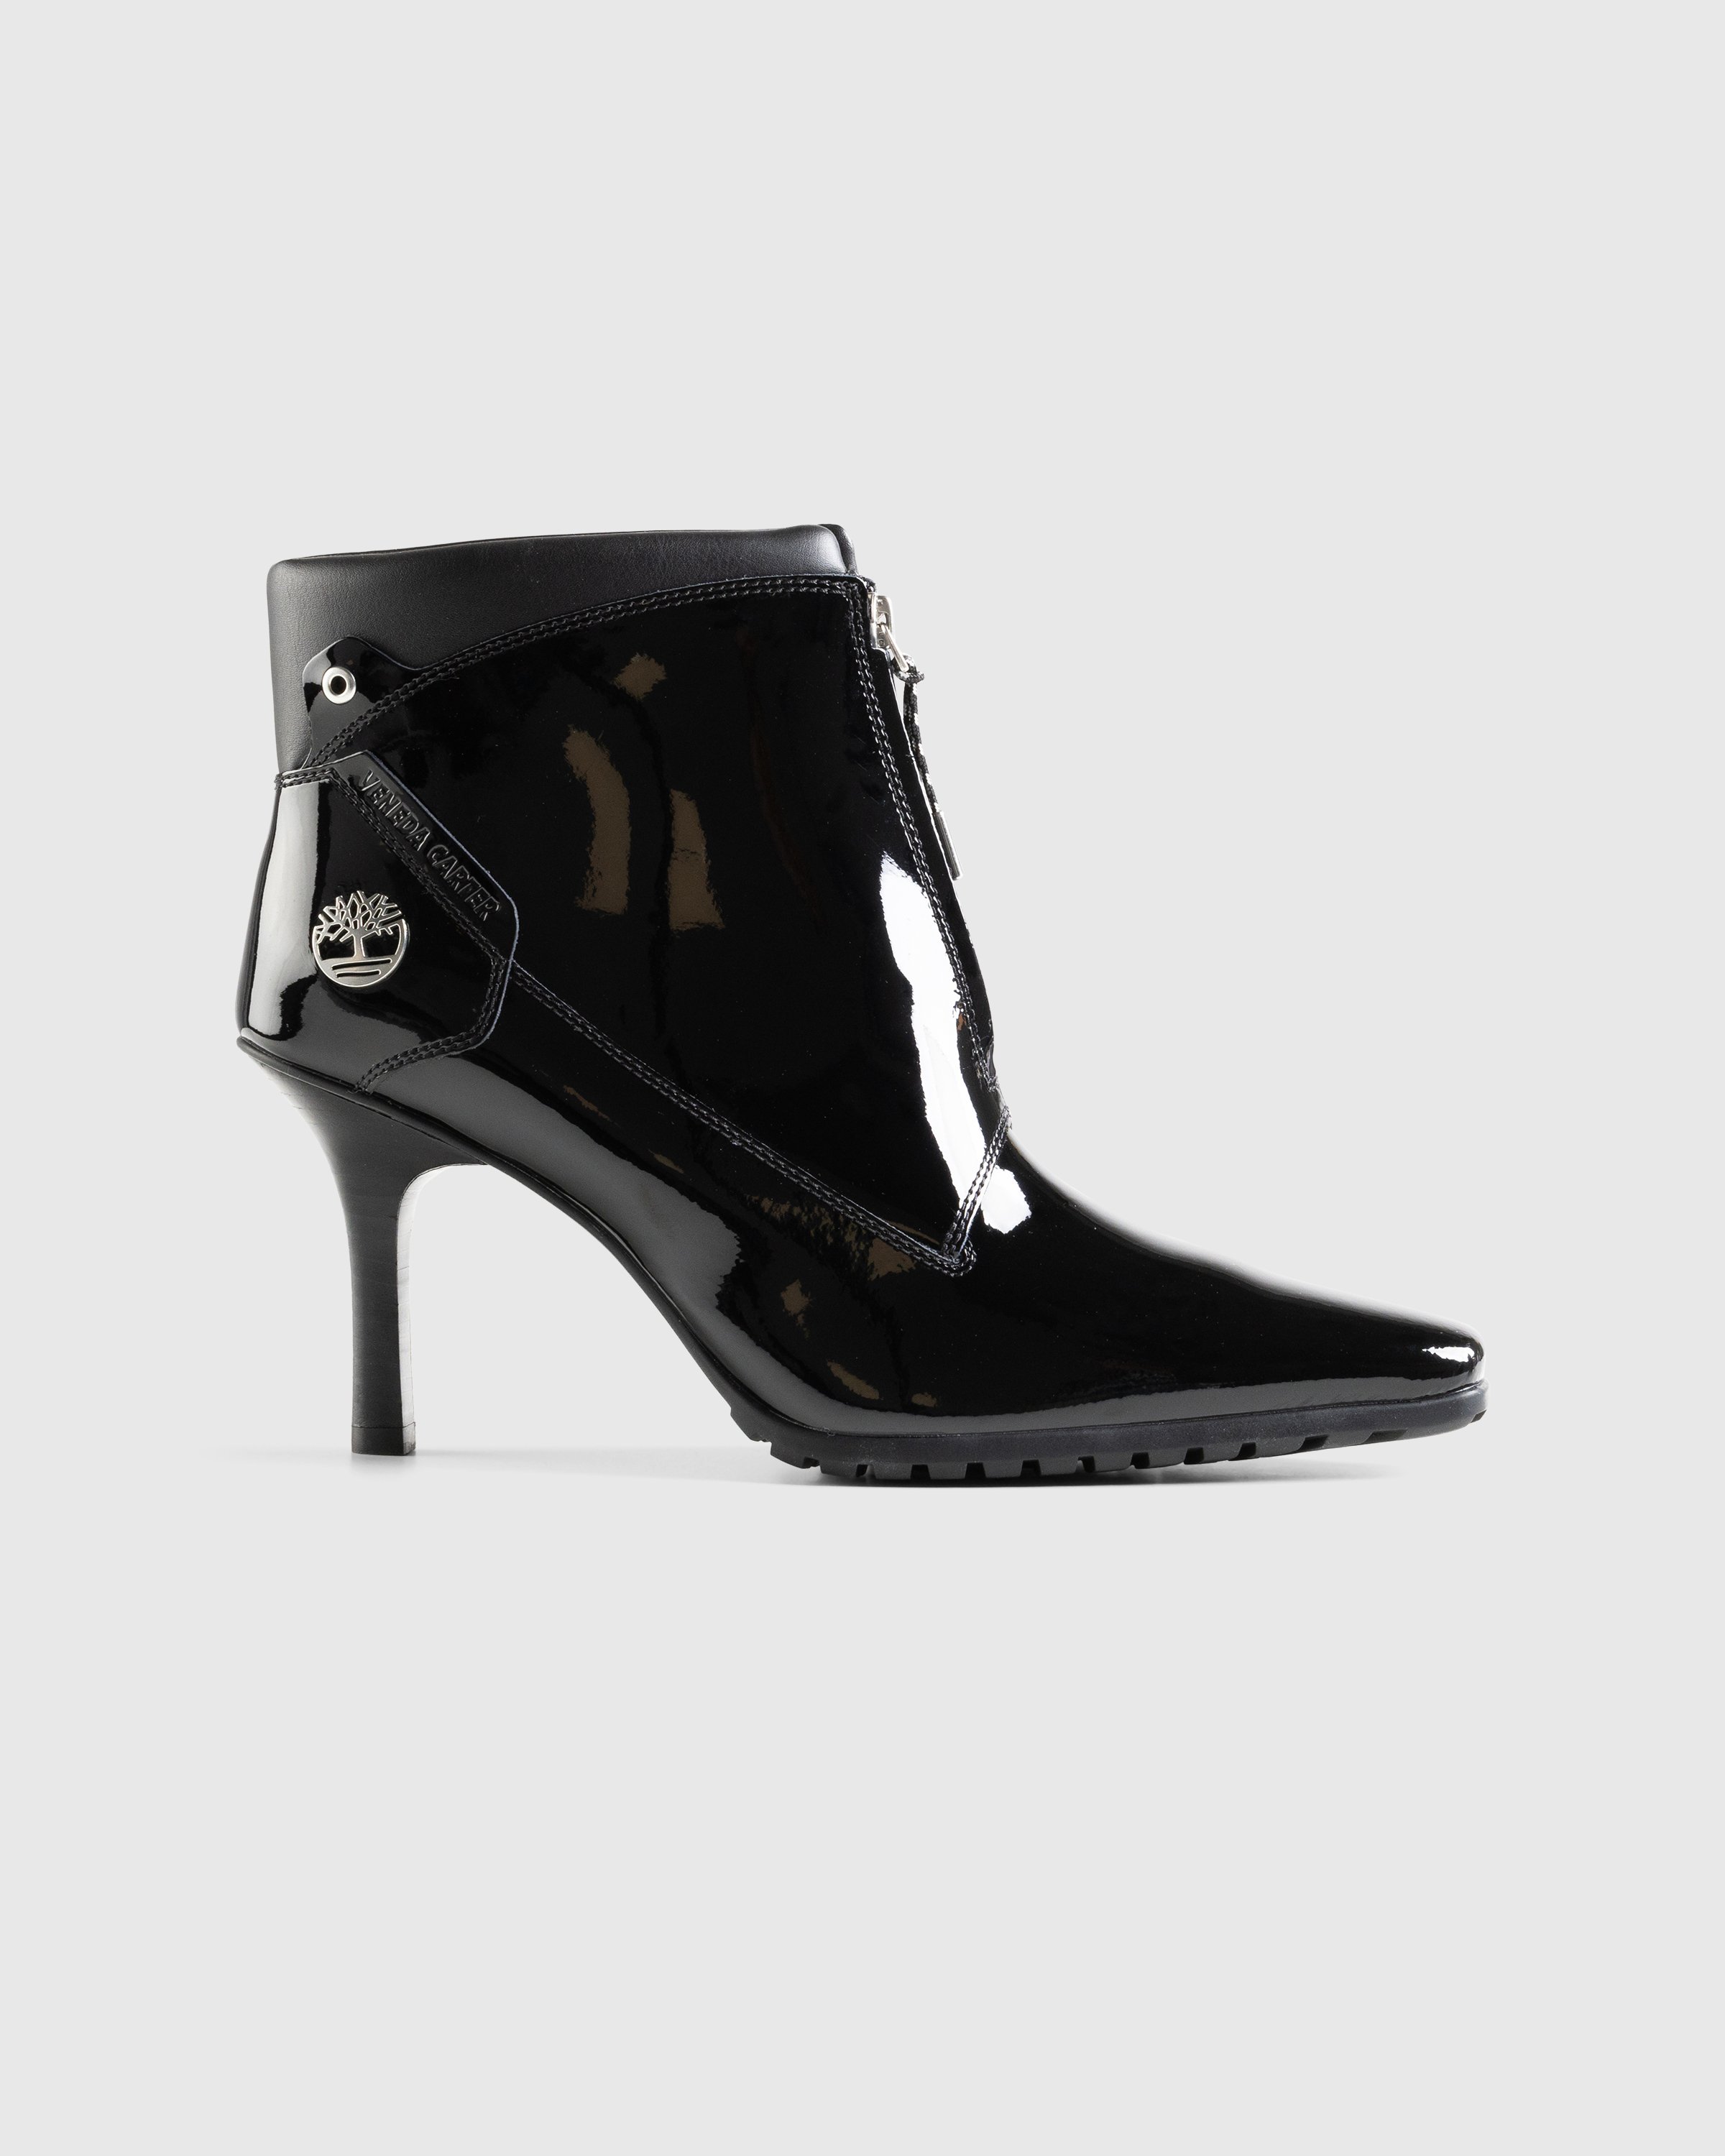 Veneda Carter x Timberland - MID ZIP UP BOOT BLACK PATENT LEATHER - Footwear - Black - Image 1